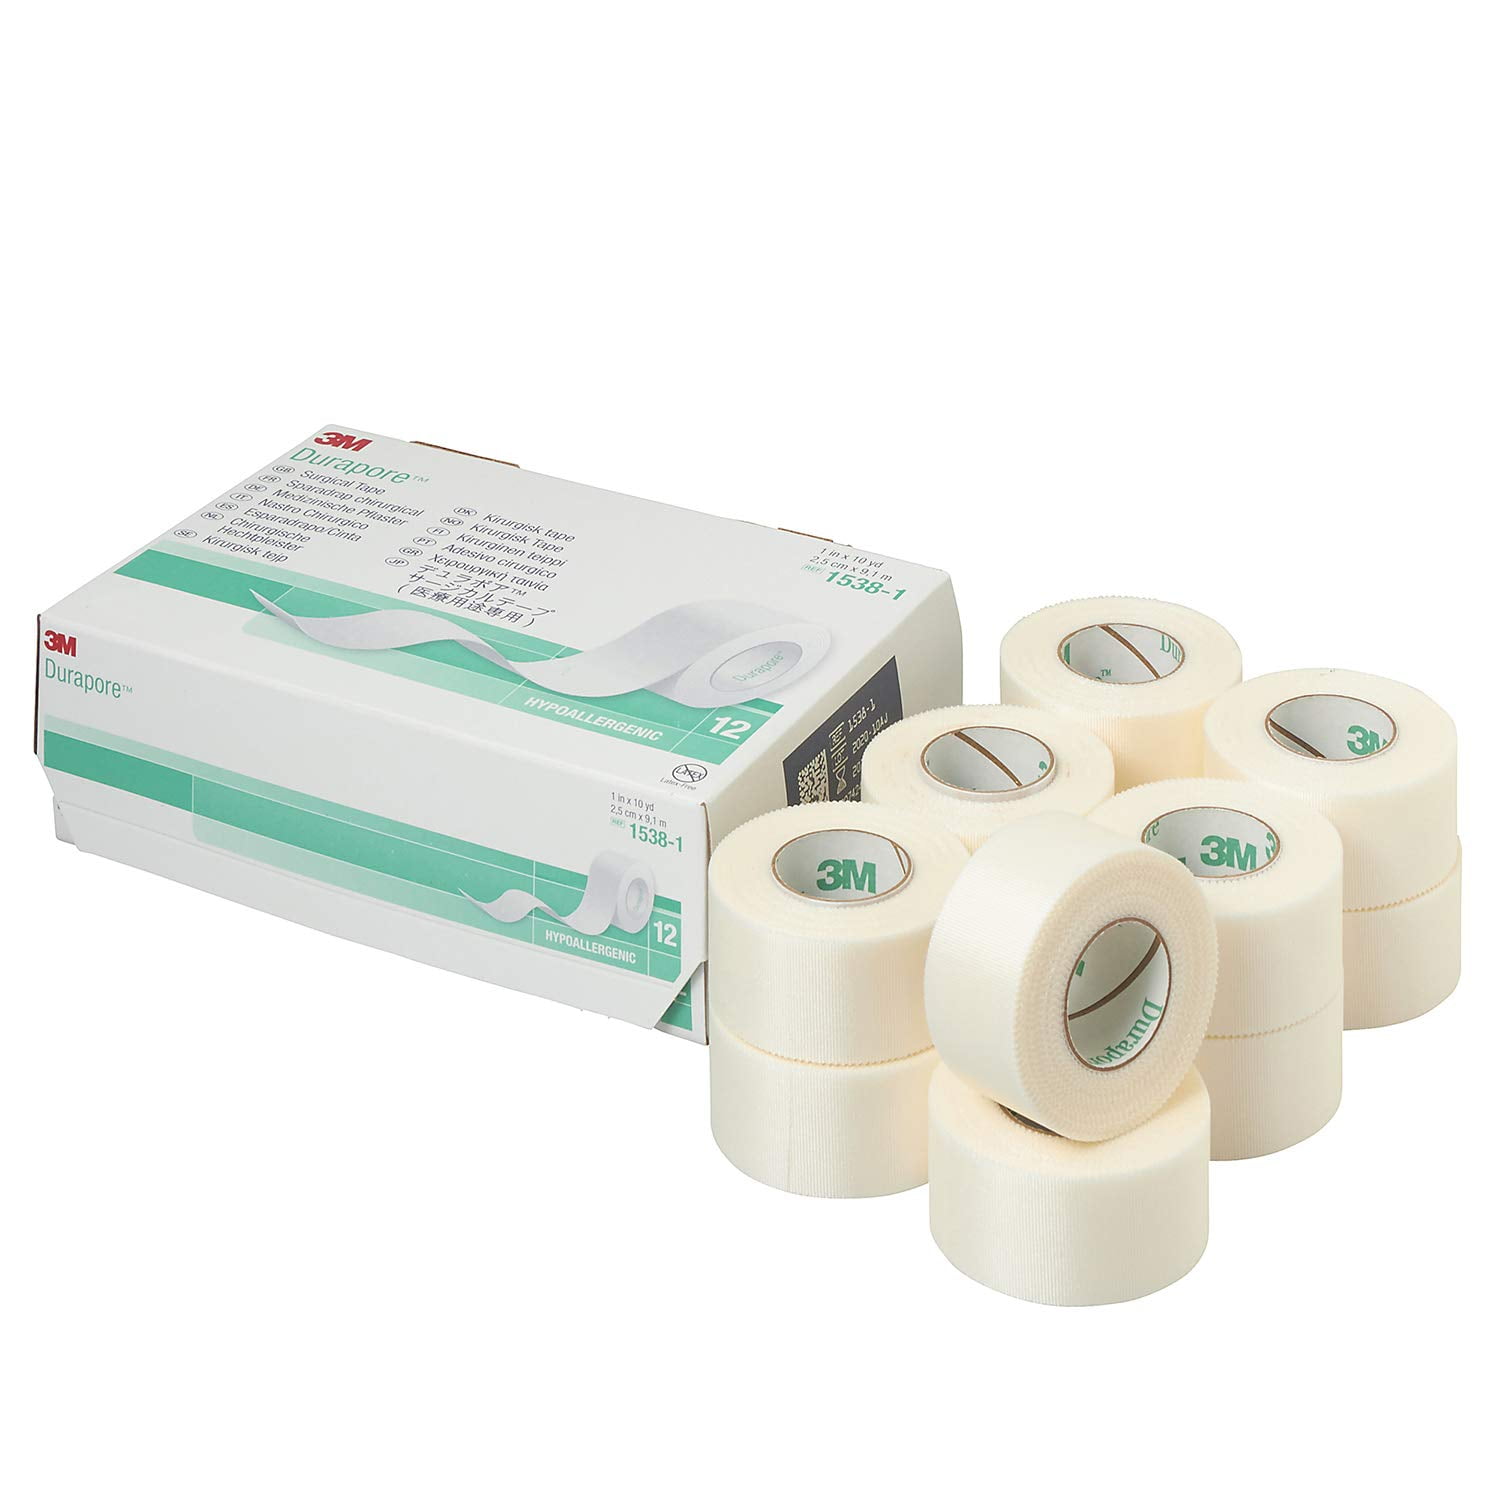 3M Durapore Surgical Tape 3 x 10 Yd 1538-3, 1 Box, 4 Rolls/Box, 3 Inch X 10  Yard - City Market